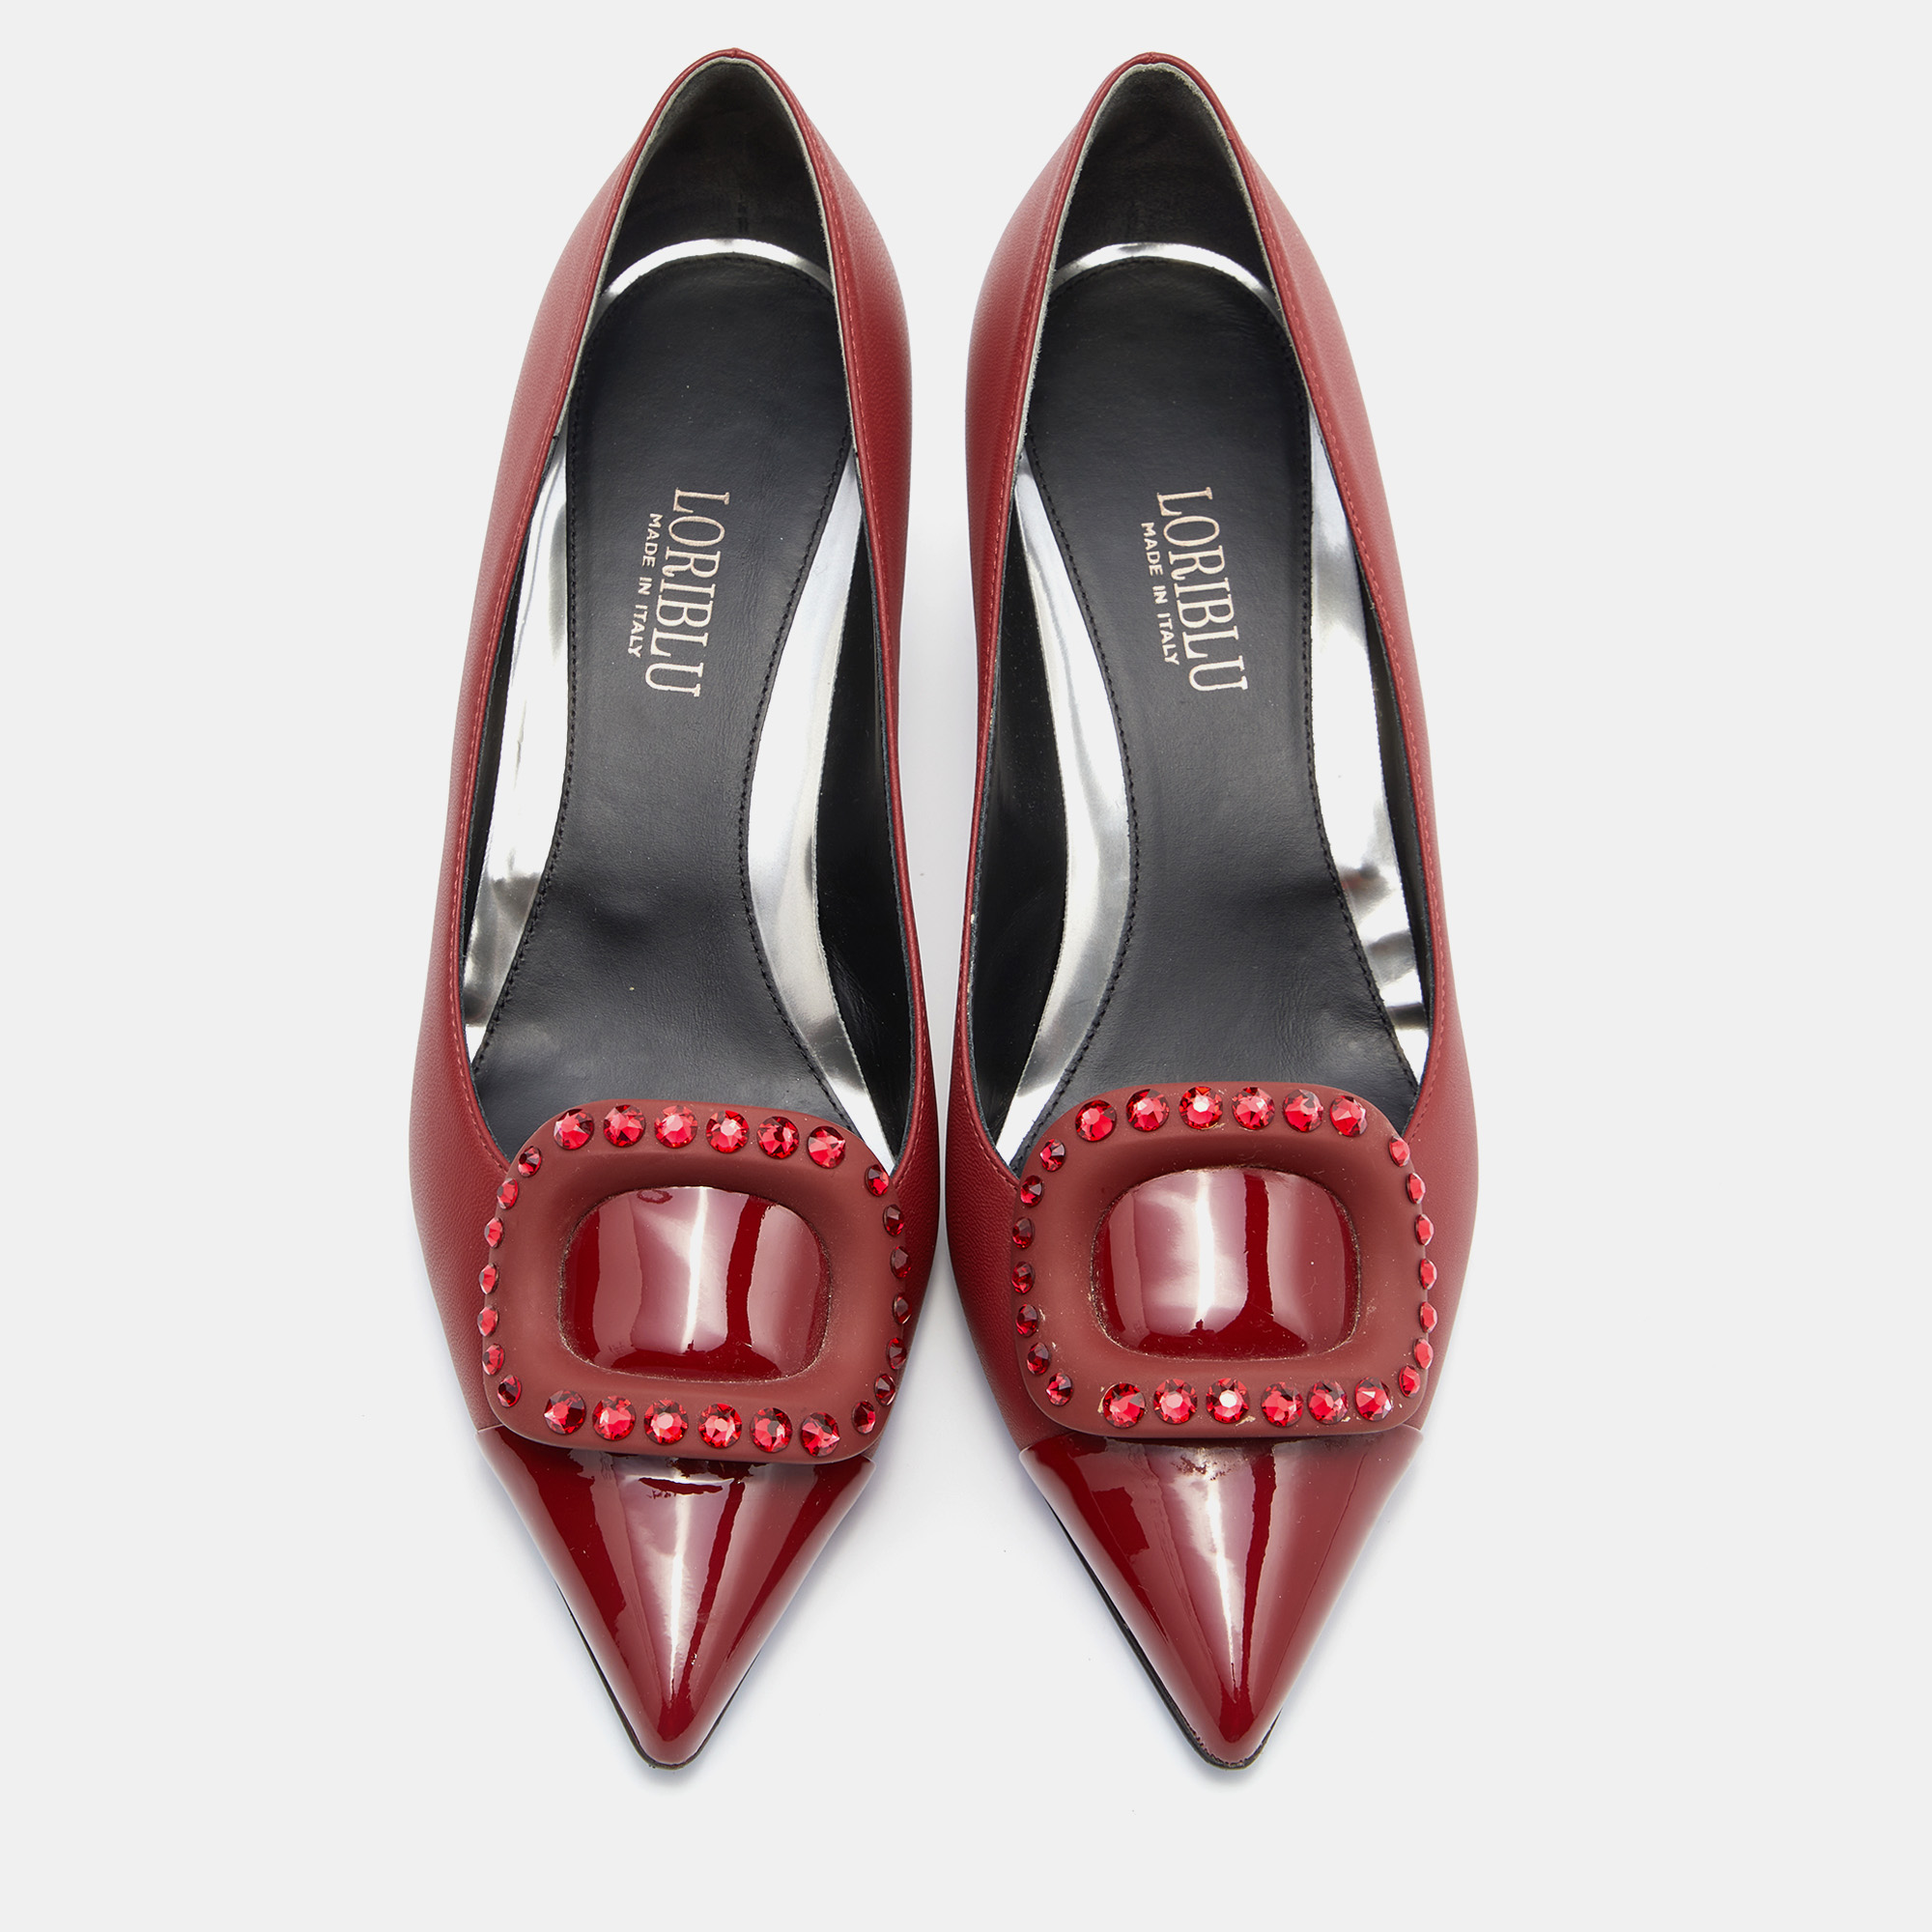 Loriblu Dark Red Leather Pointed Toe Crystal Embellished Pumps Size 38.5